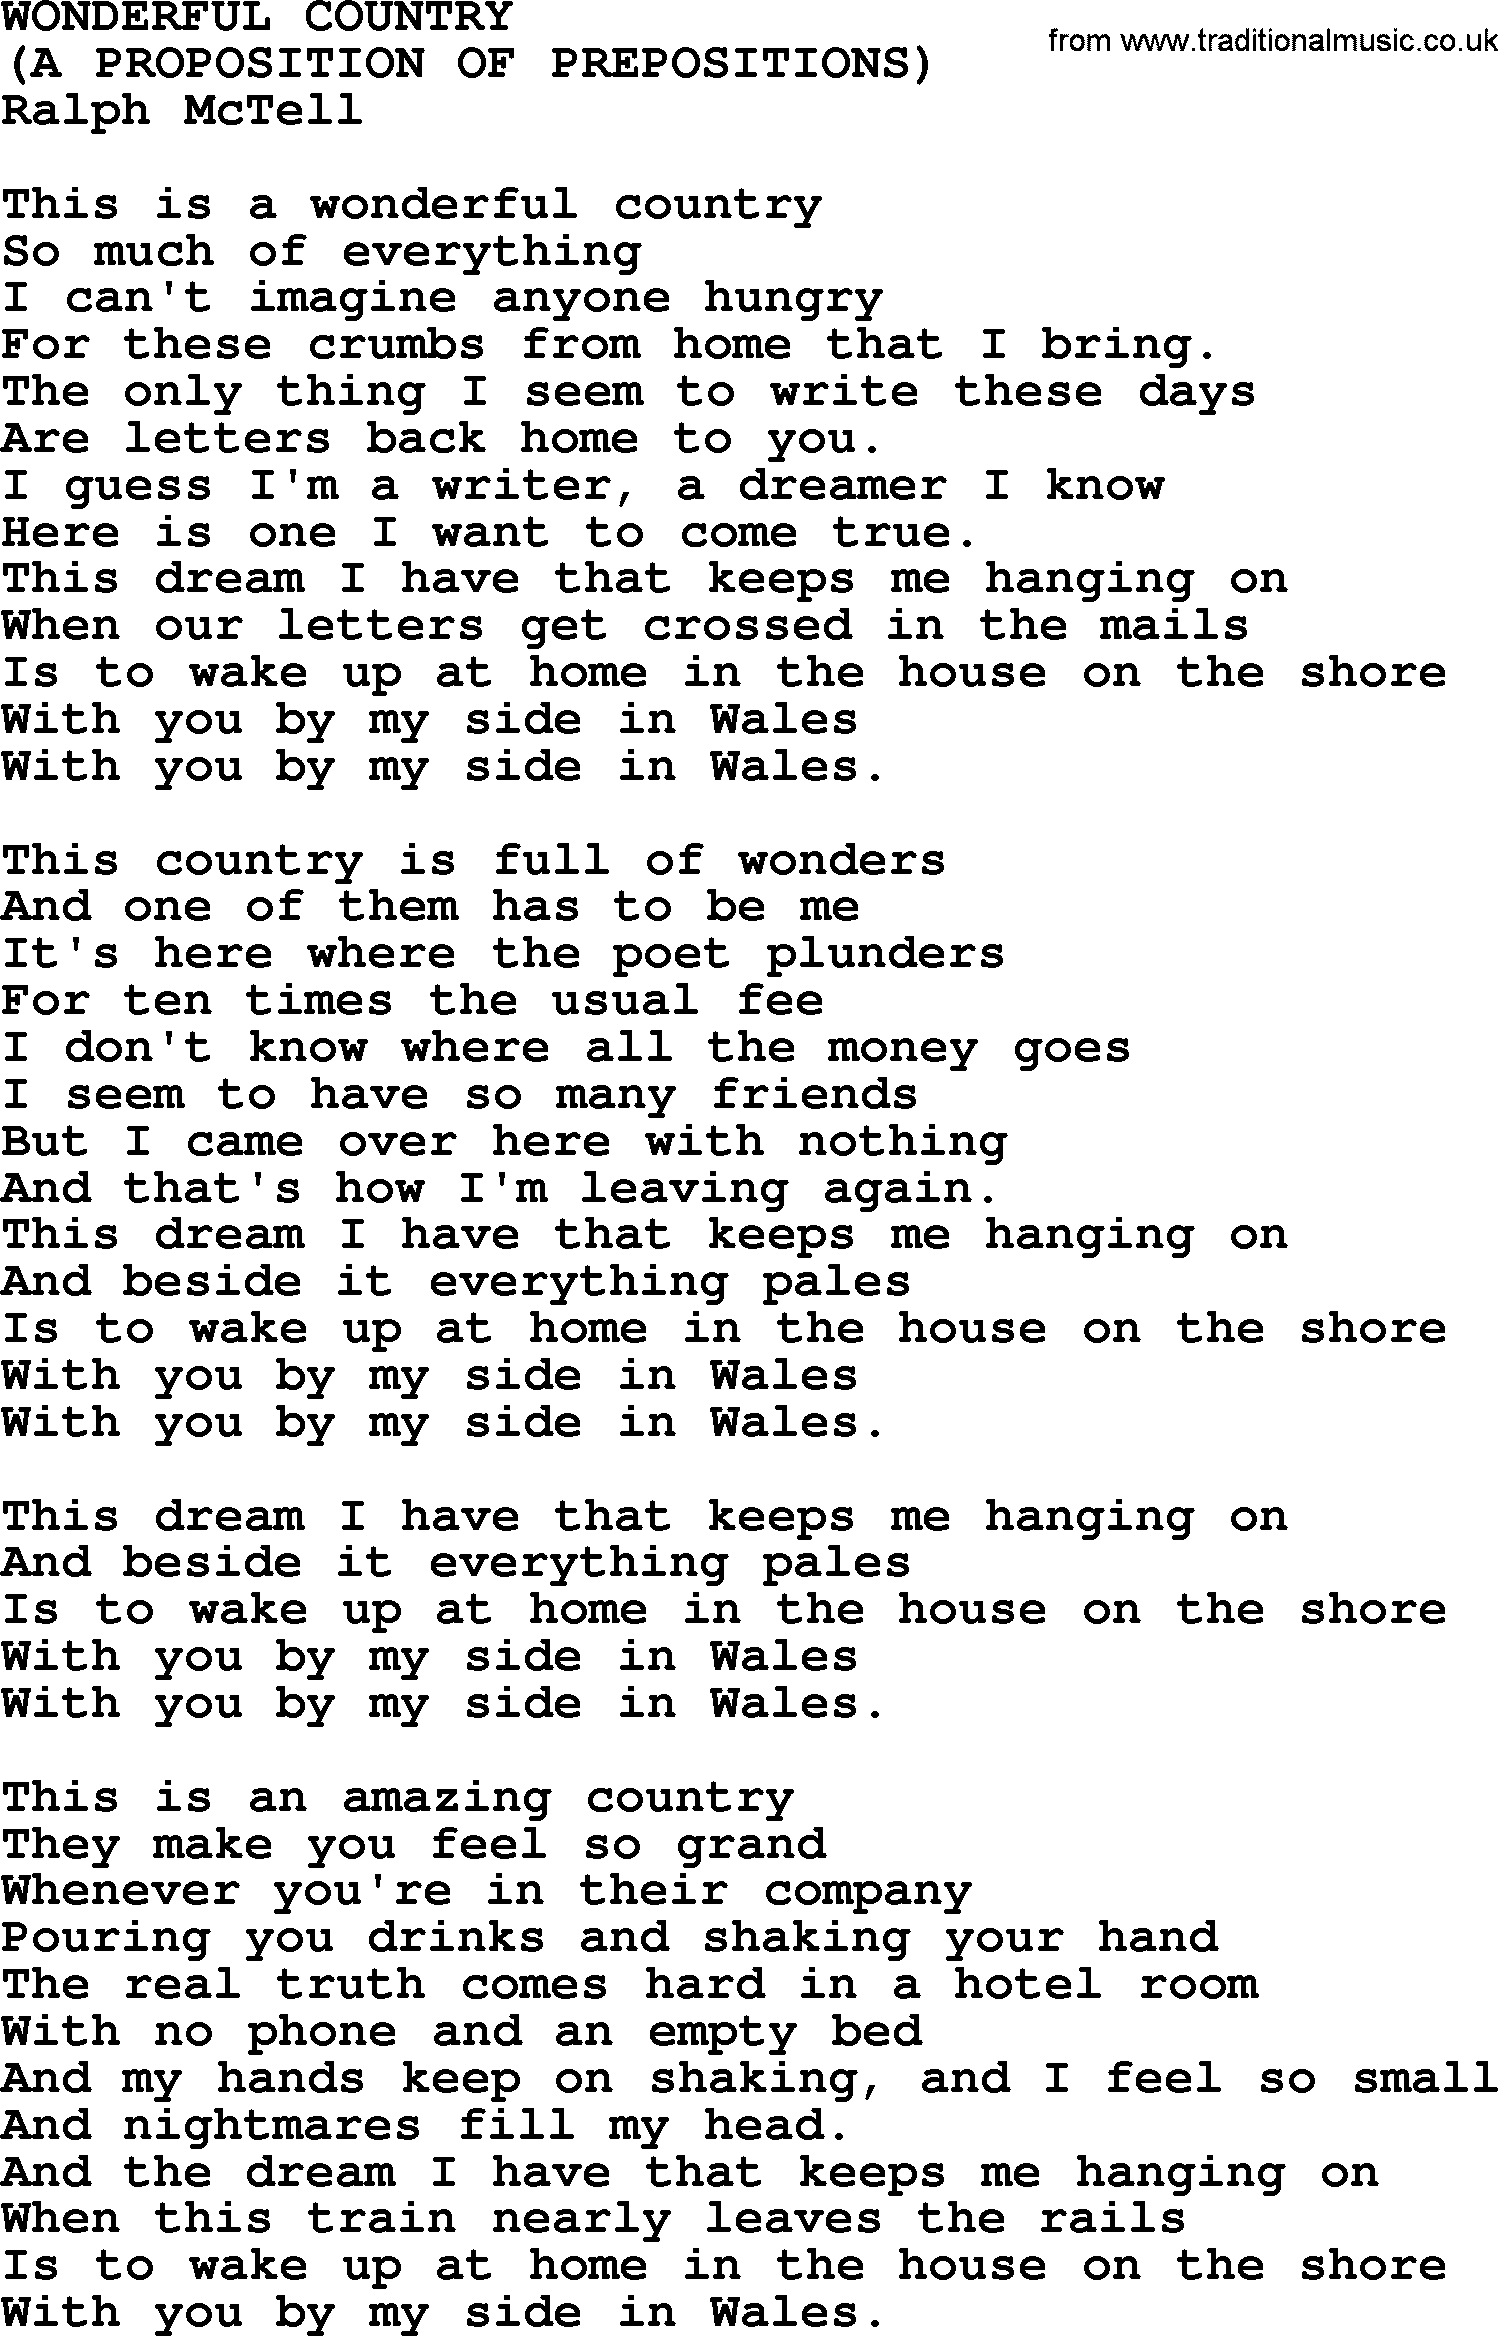 Ralph McTell Song: Wonderful Country, lyrics